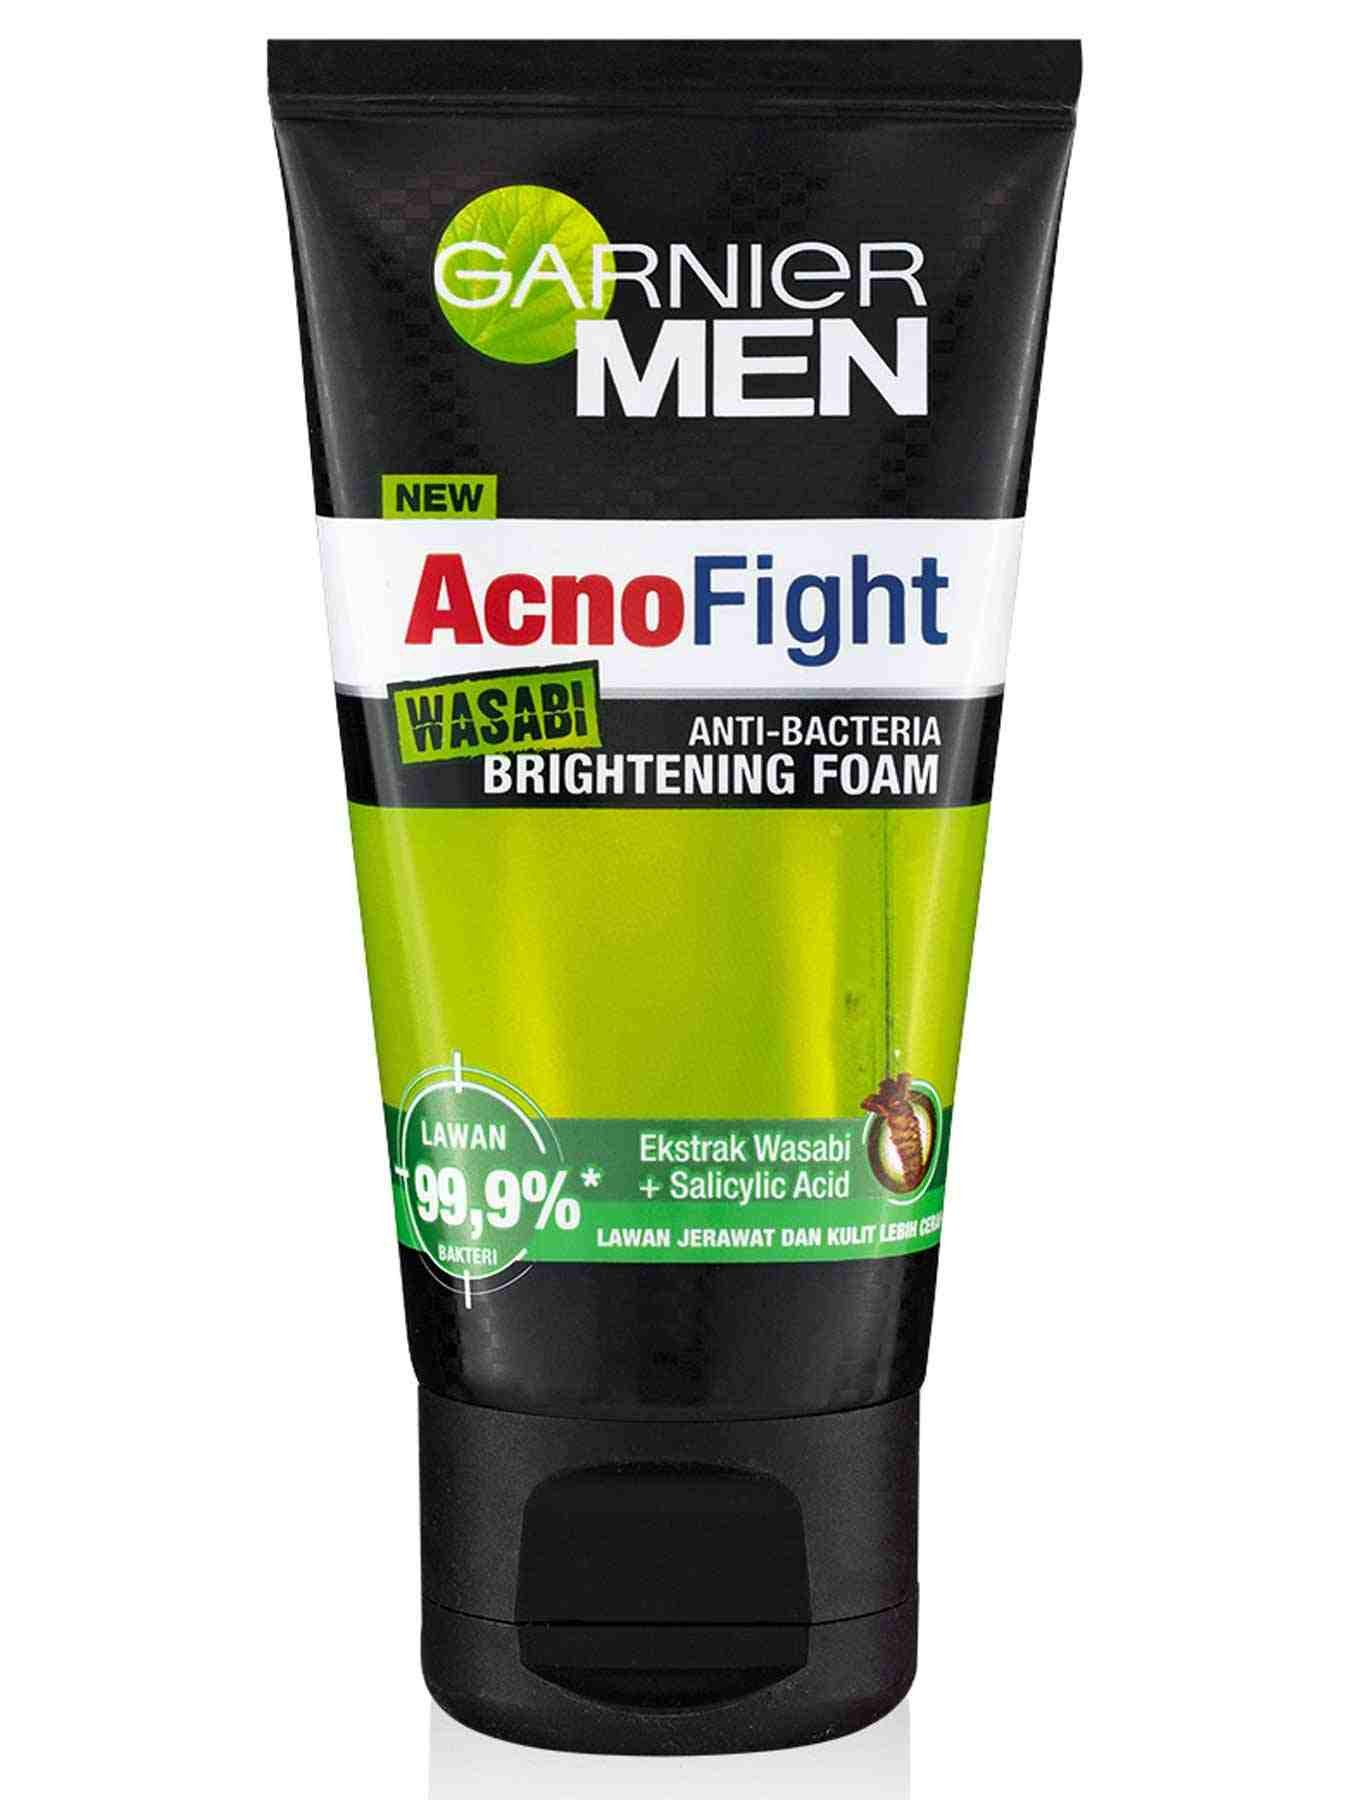 acno fight wasabi anti bacteria brightening foam 8992304039607_t1-min